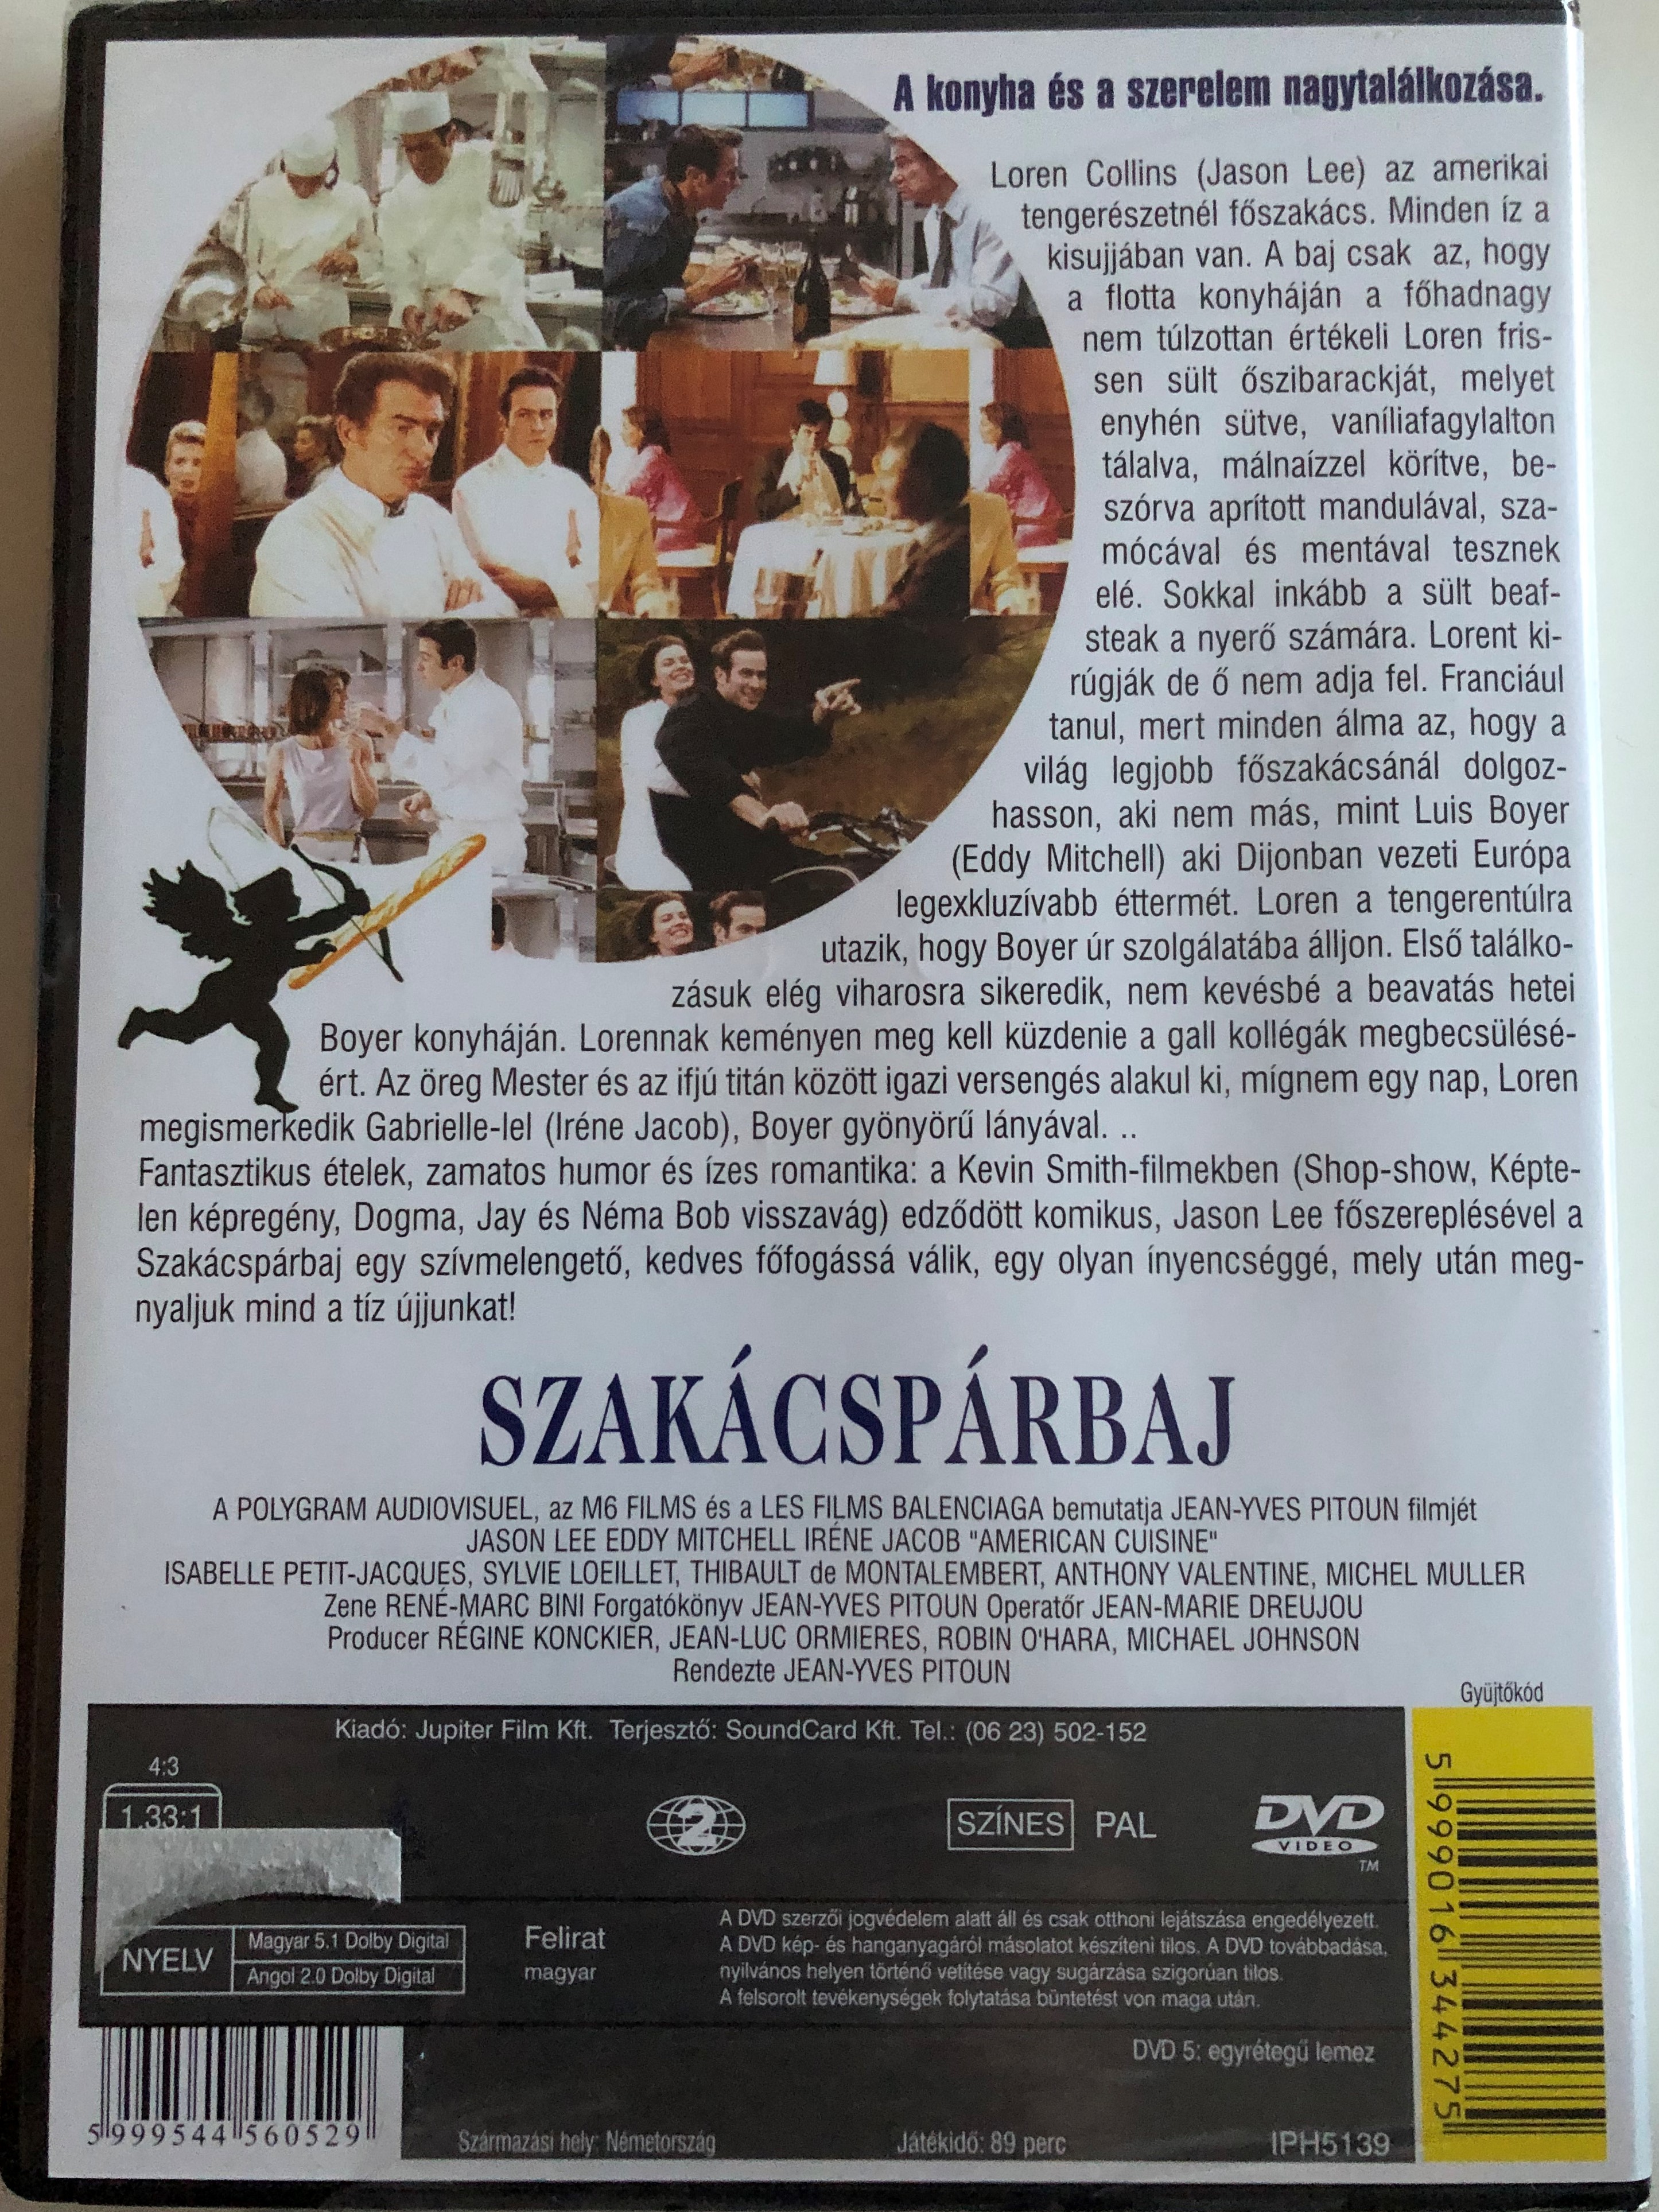 american-cuisine-dvd-1998-szak-csp-rbaj-directed-by-jean-yves-pitoun-2.jpg